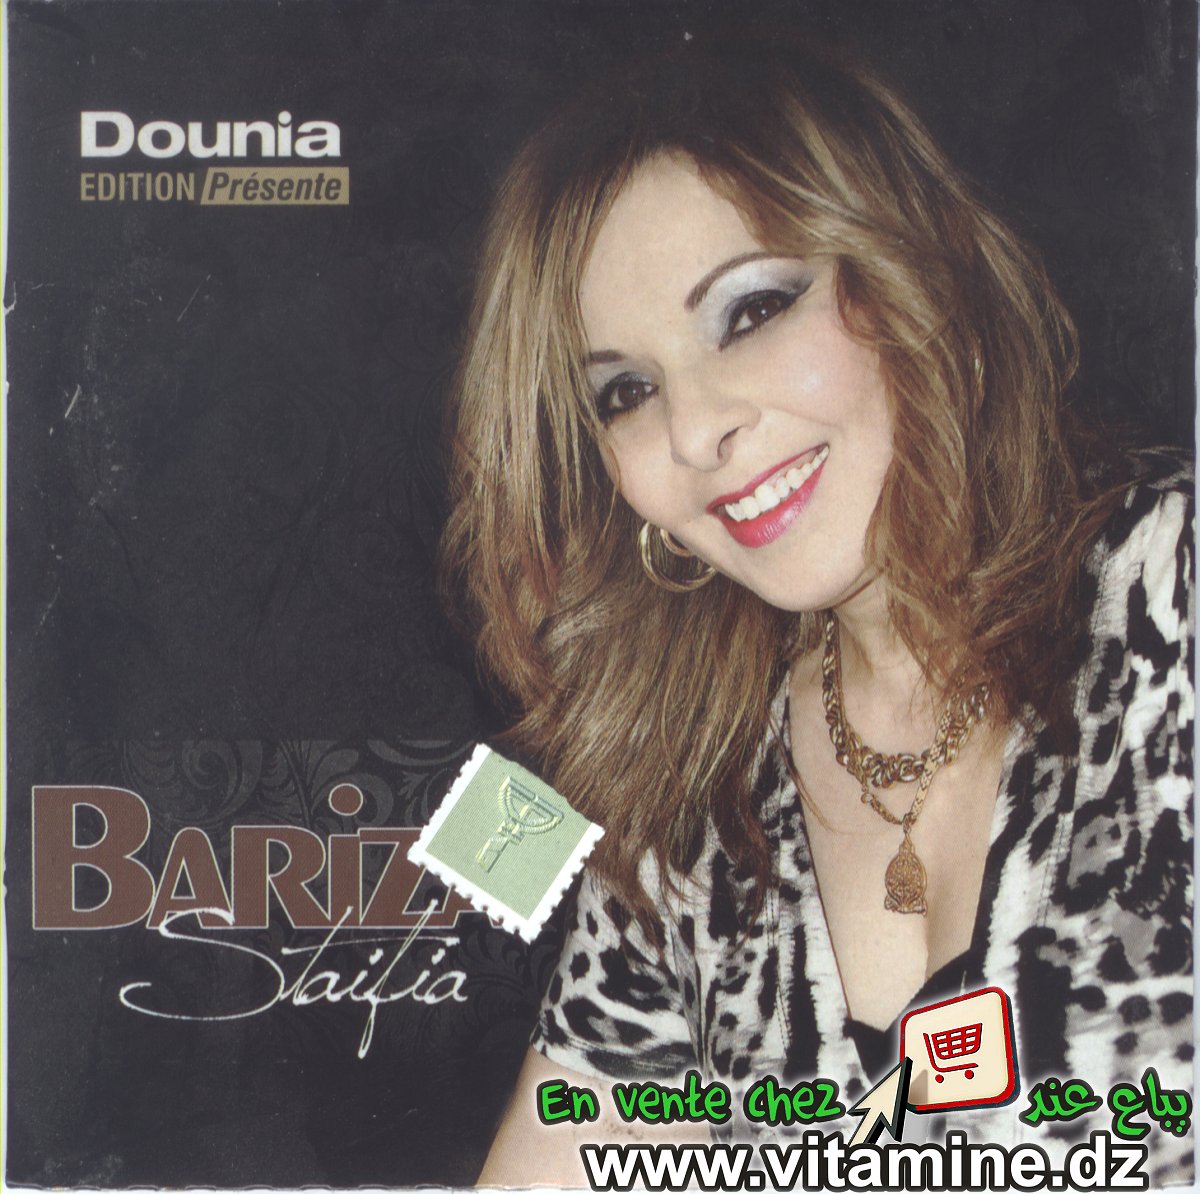 Bariza Staifia - compilation